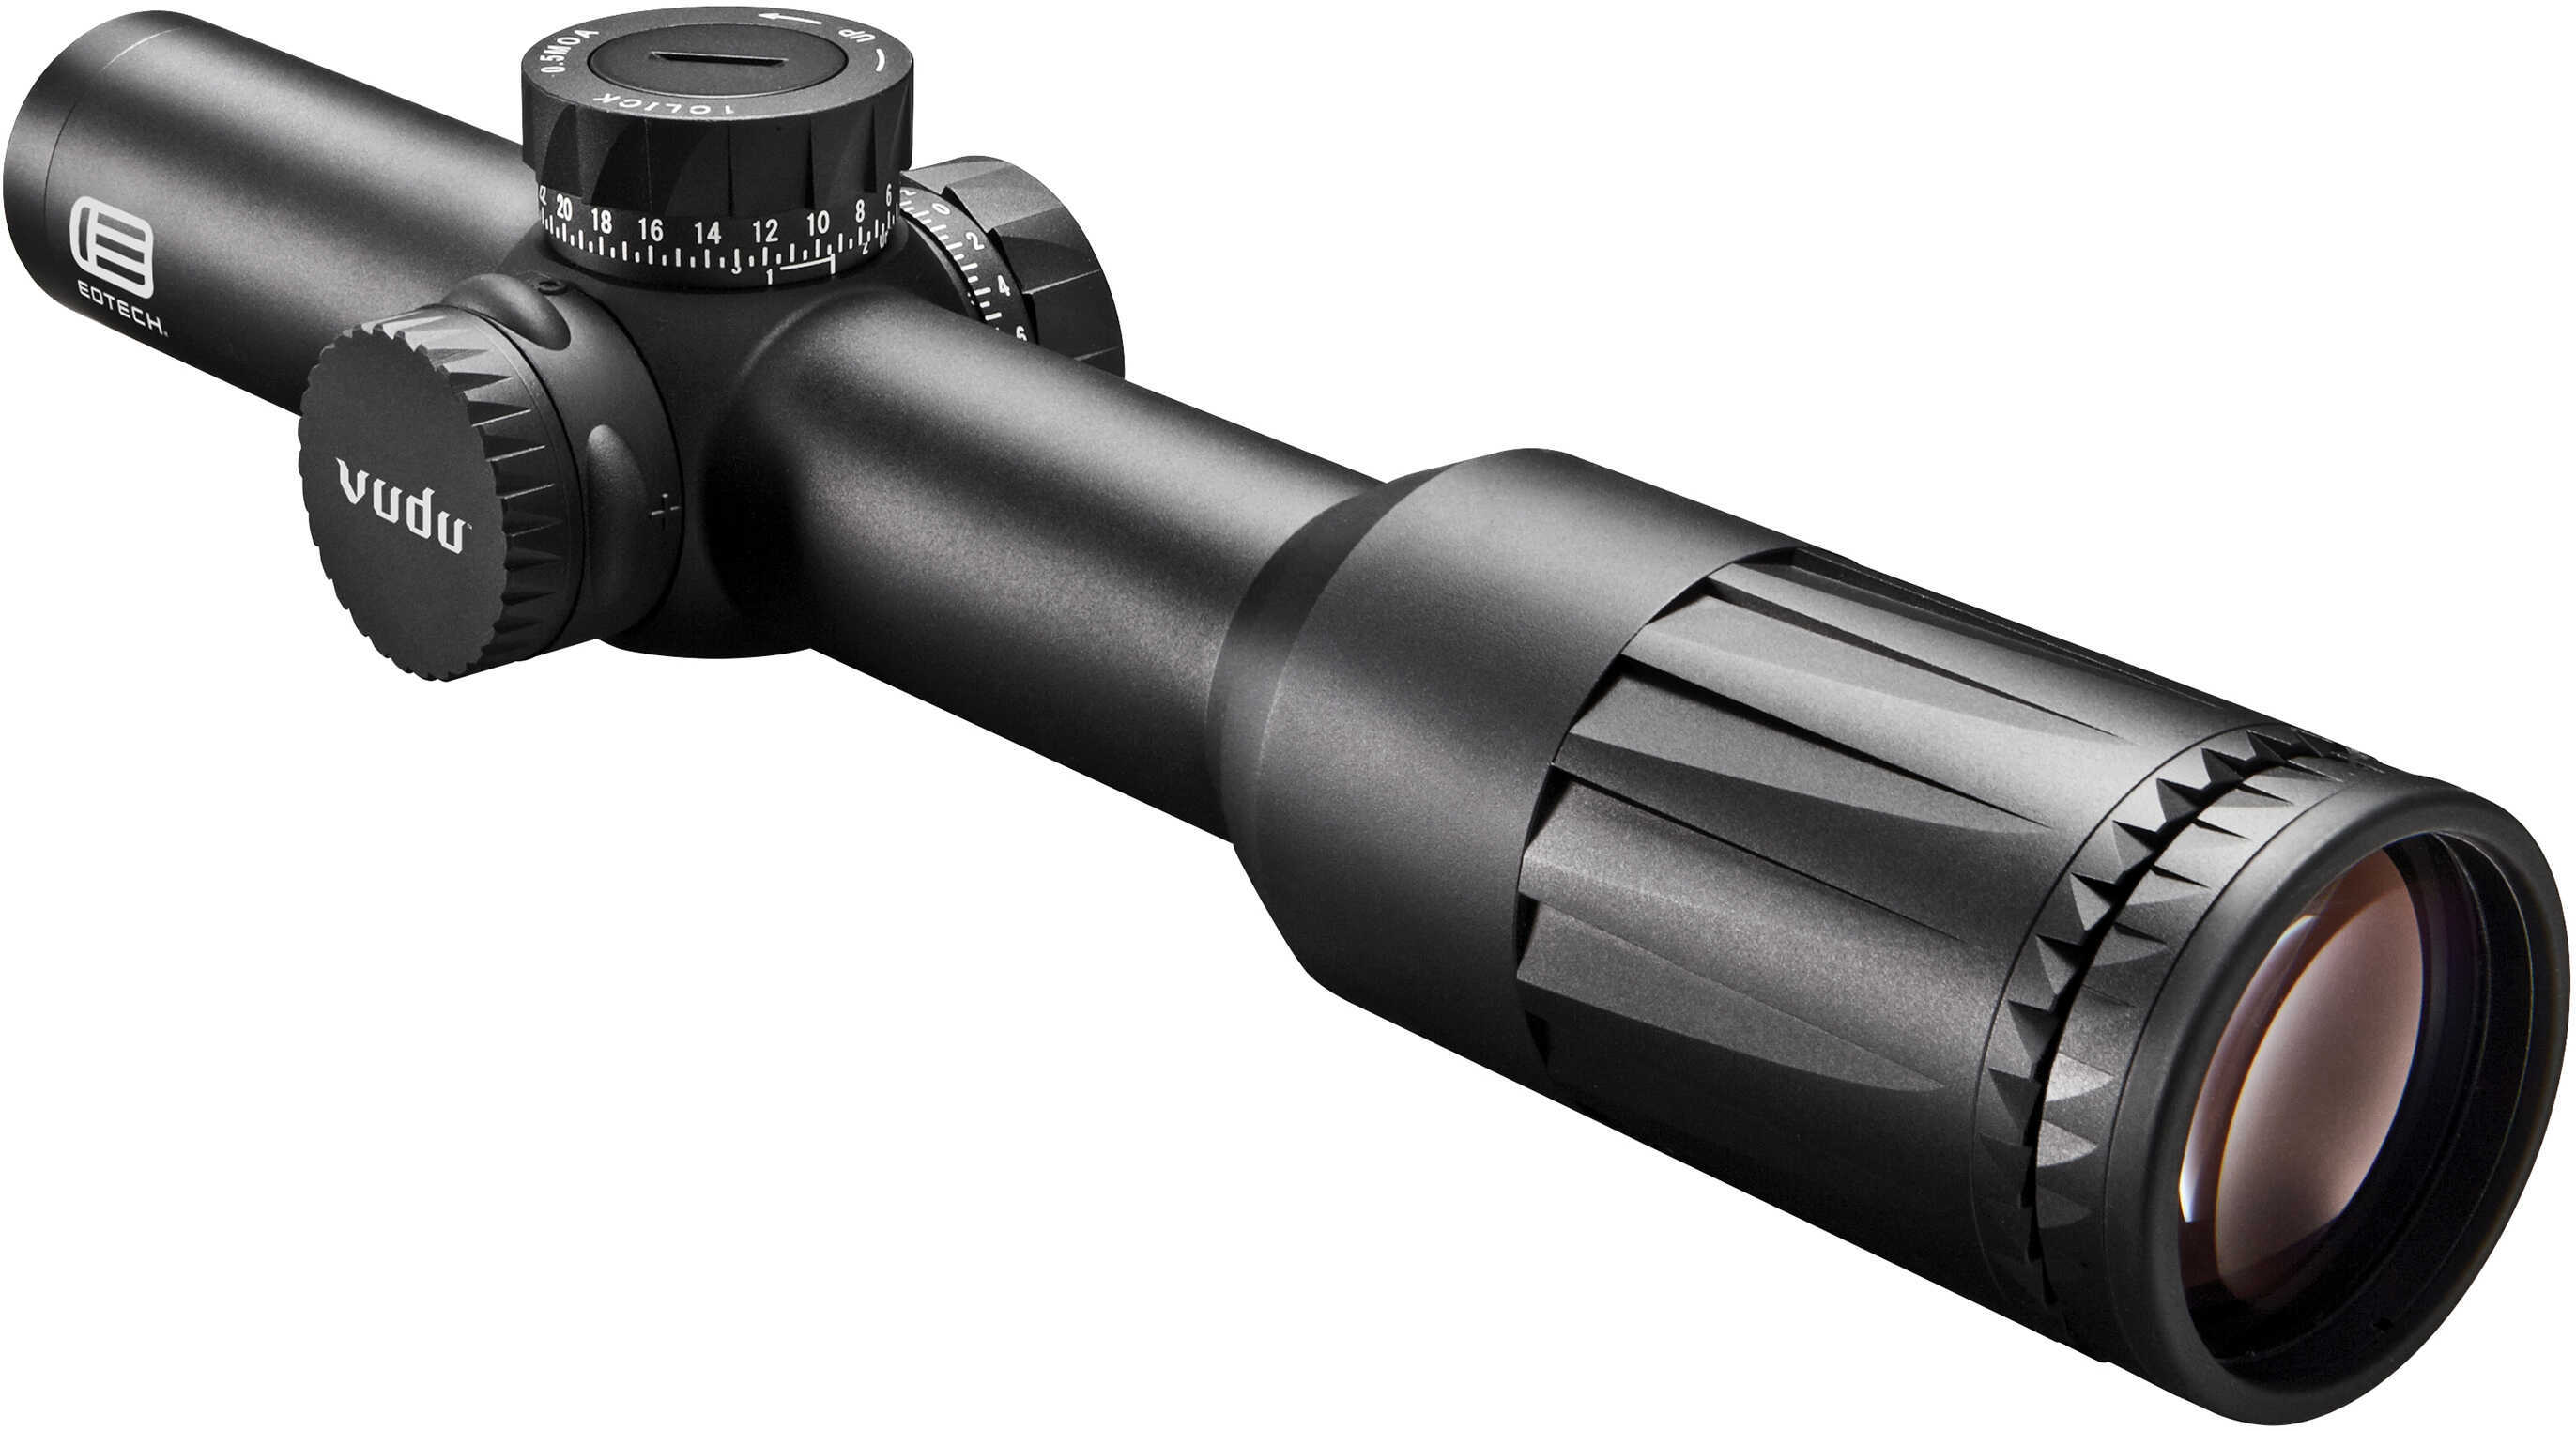 EOTech Vudu Precision Rifle Scope - 1-6x24mm FFP Illuminated SR3 Reticle Black